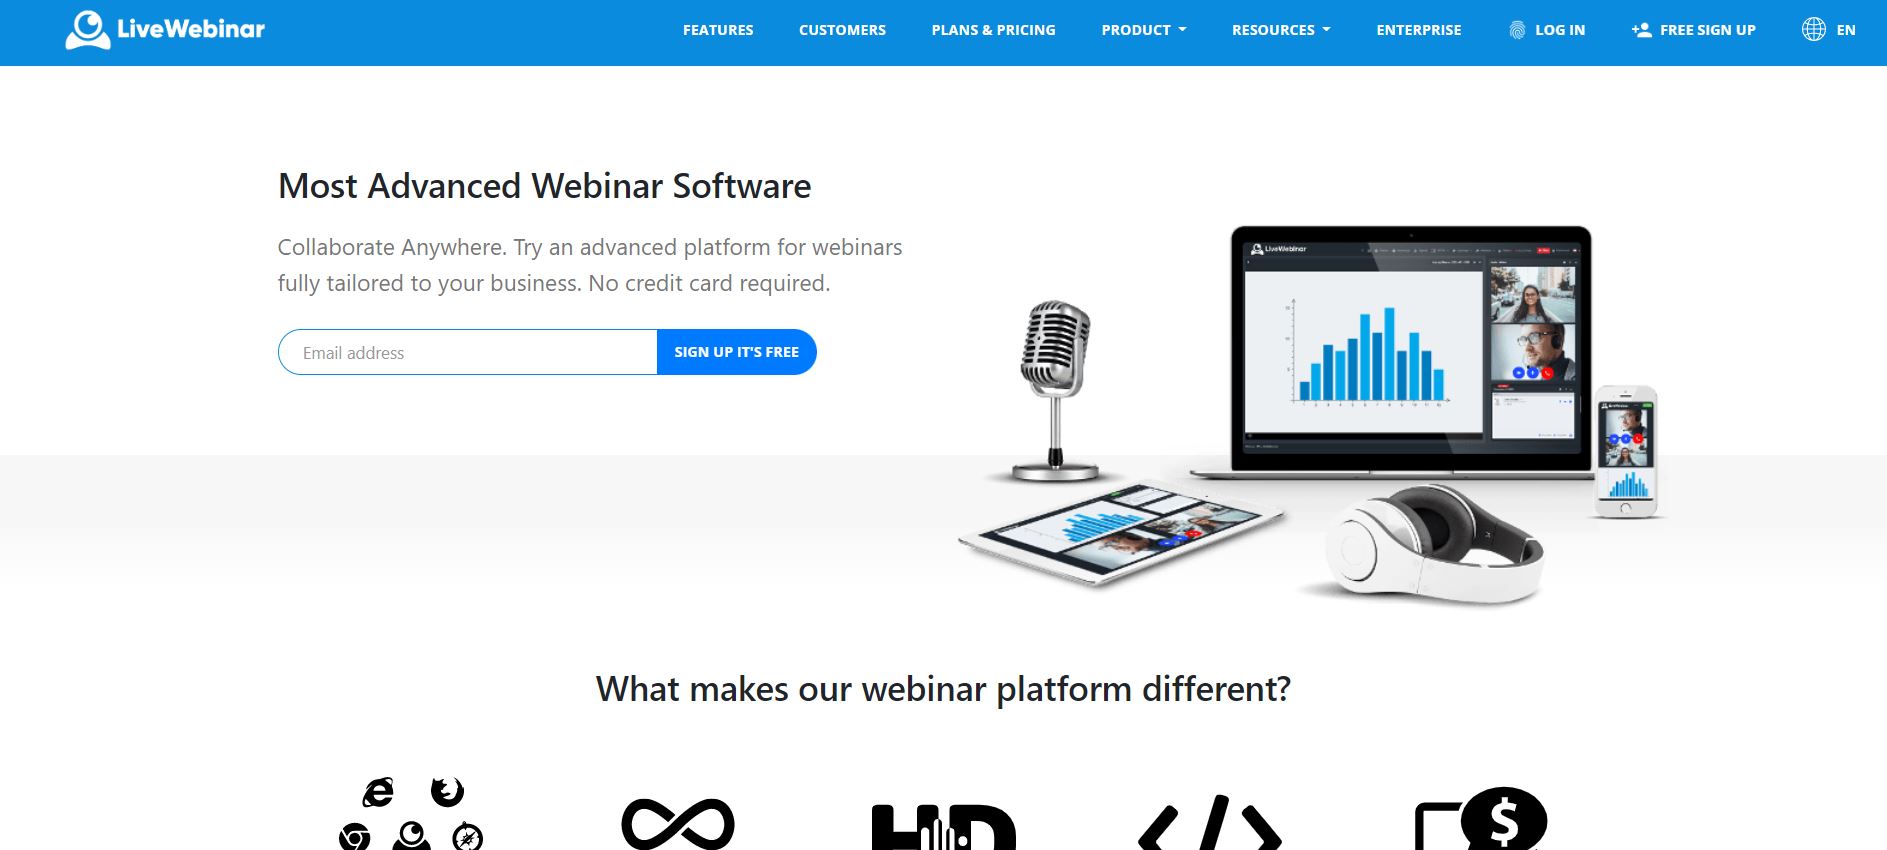 The Best Webinar Software Platforms| LiveWebinar.